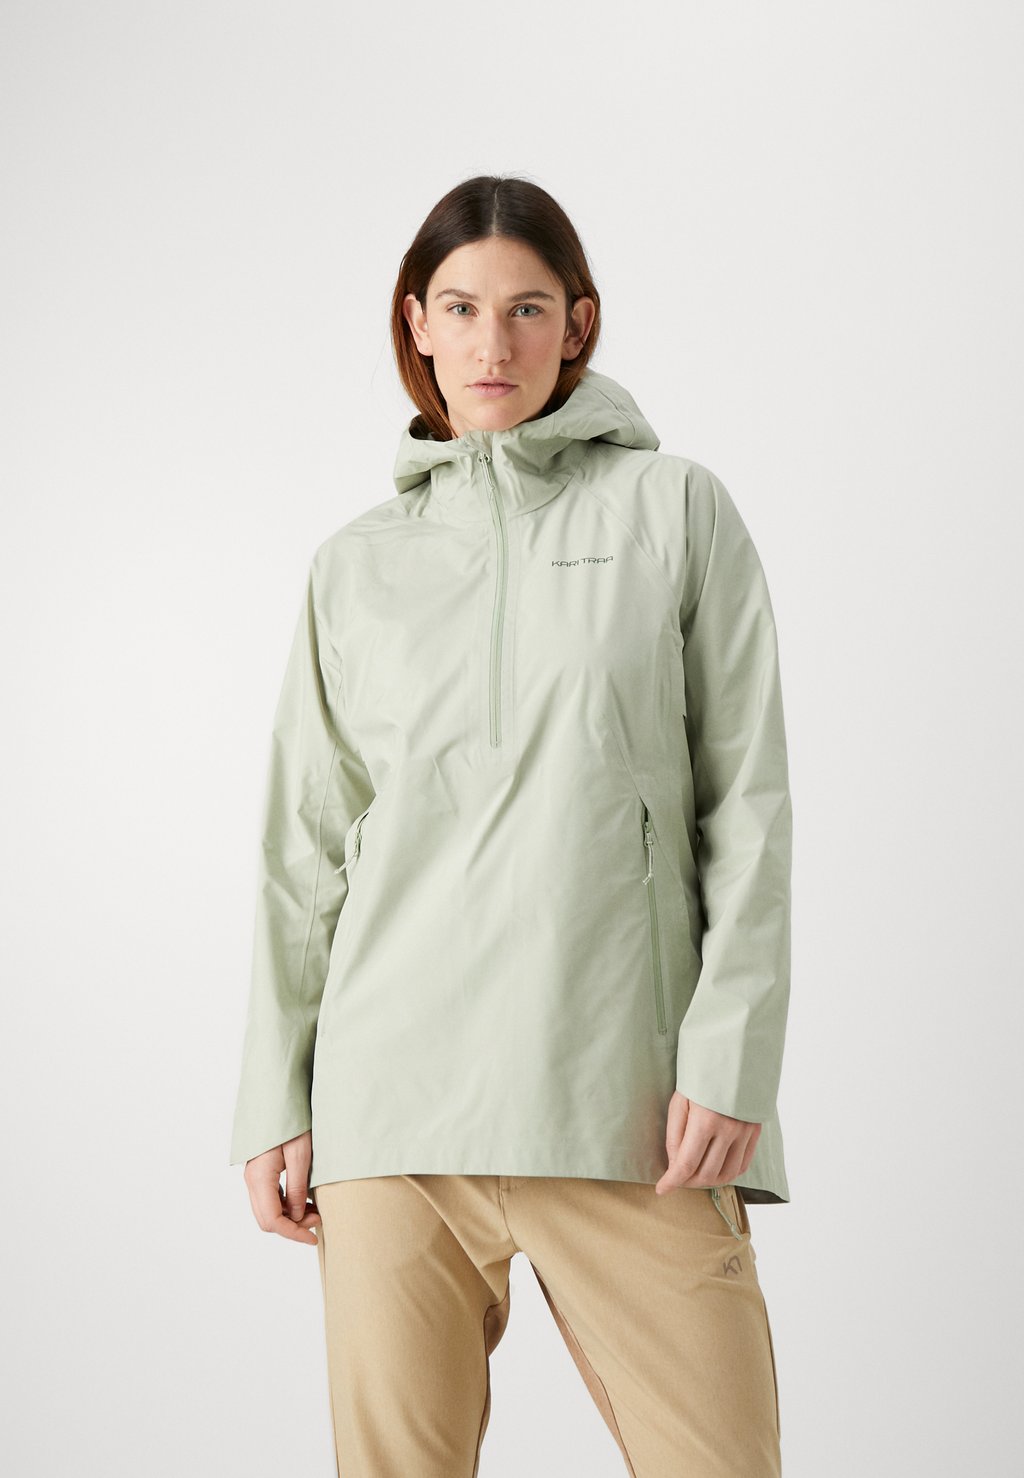 Куртка Hardshell SANNE 3L ANORAK Kari Traa, цвет light dusty green